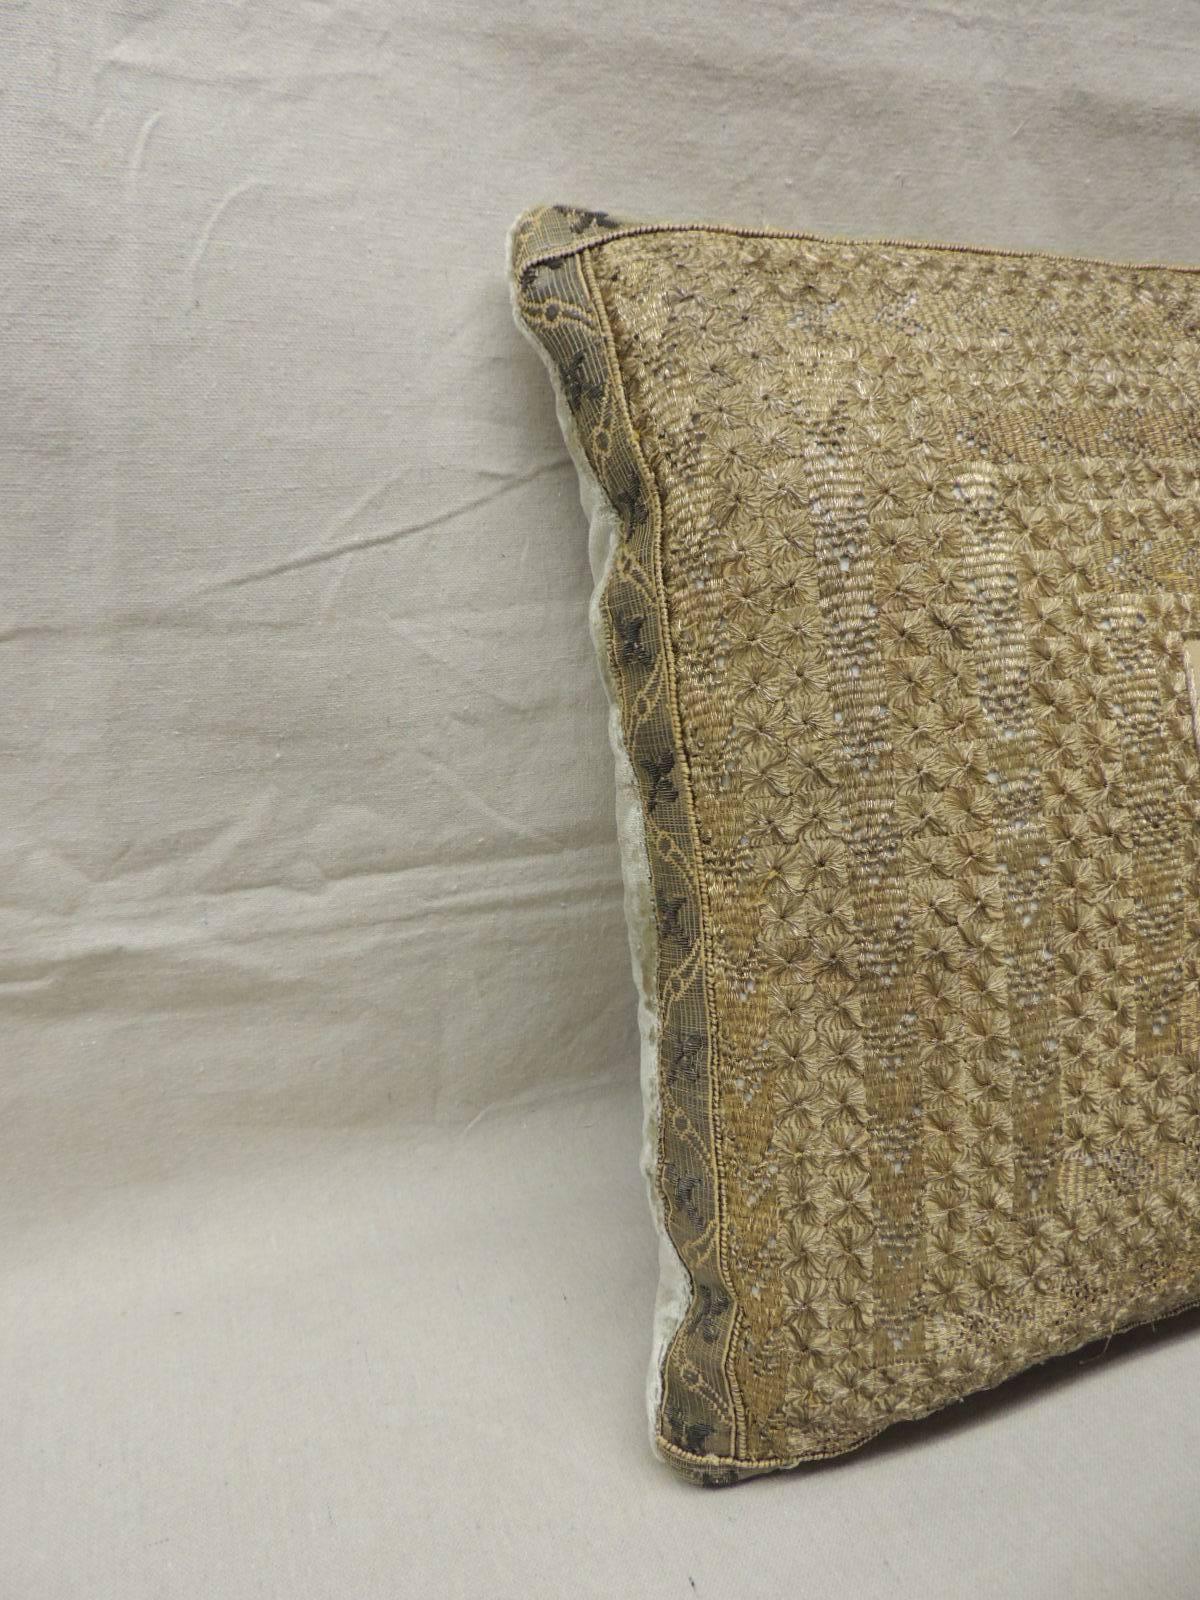 Moorish 18th Century Gold Metallic Embroidery Persian Pillow